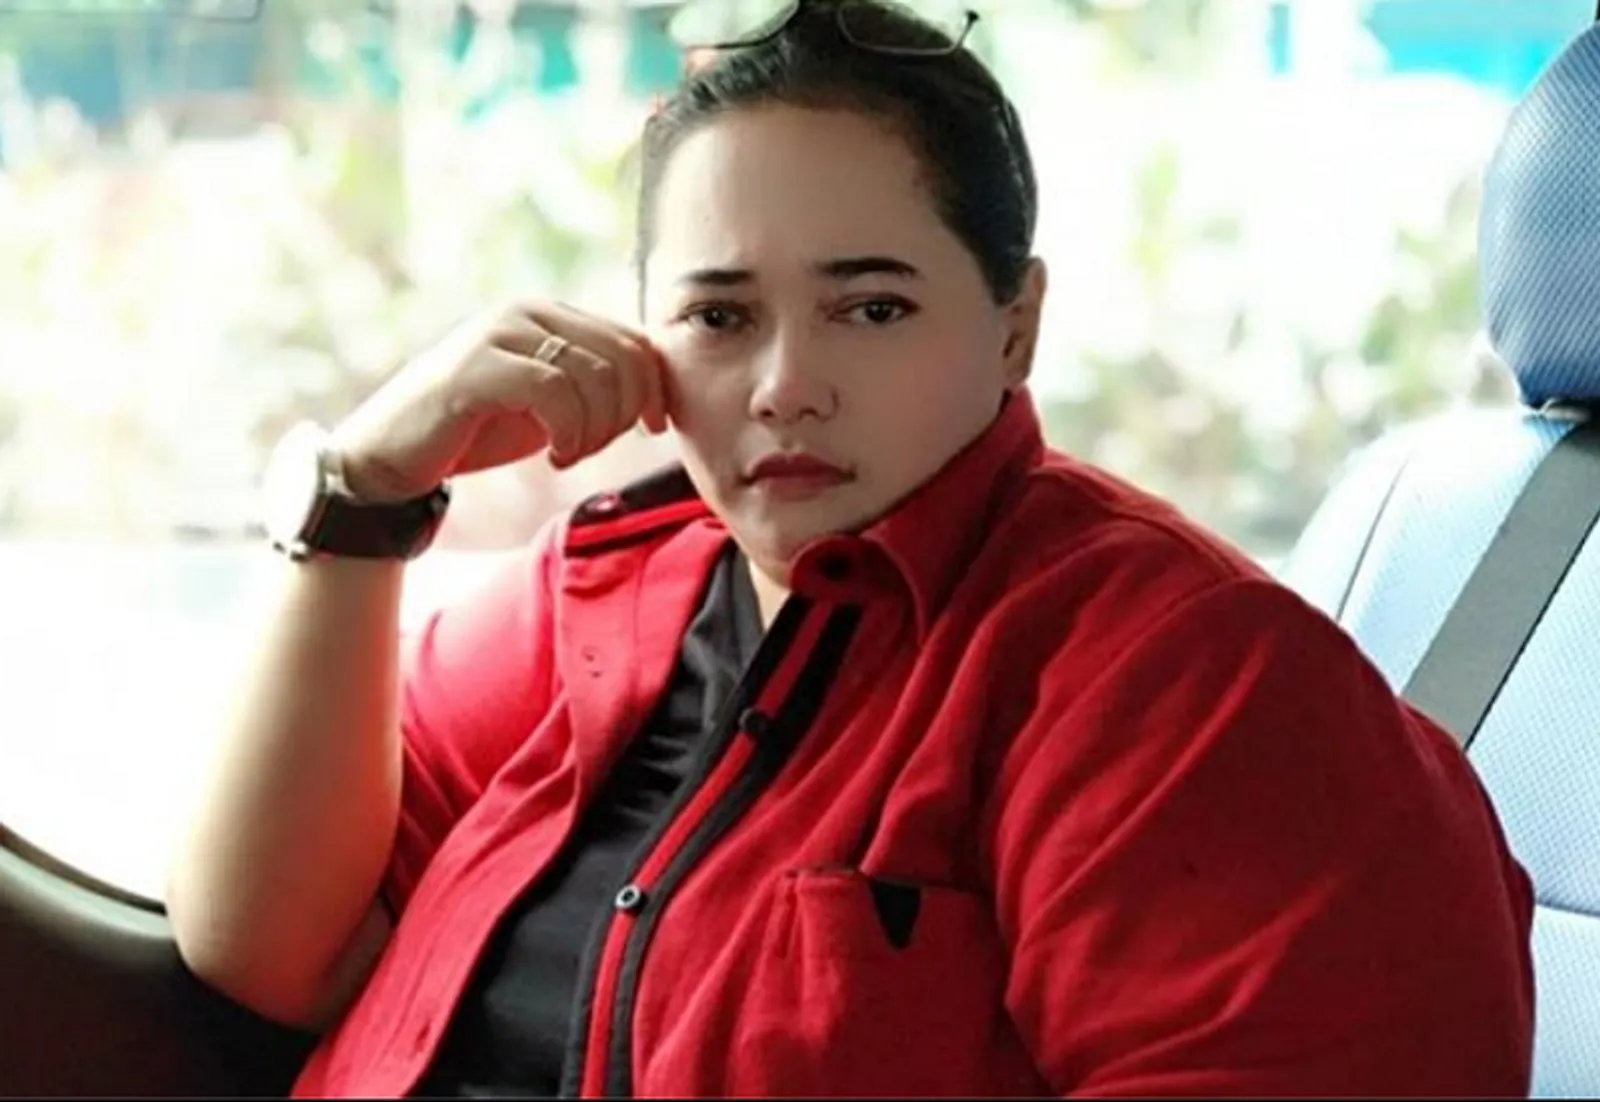 Jakarta Akan Dipimpin Wanita Tegas, 5 Paranormal Ini Ramal Tahun 2020